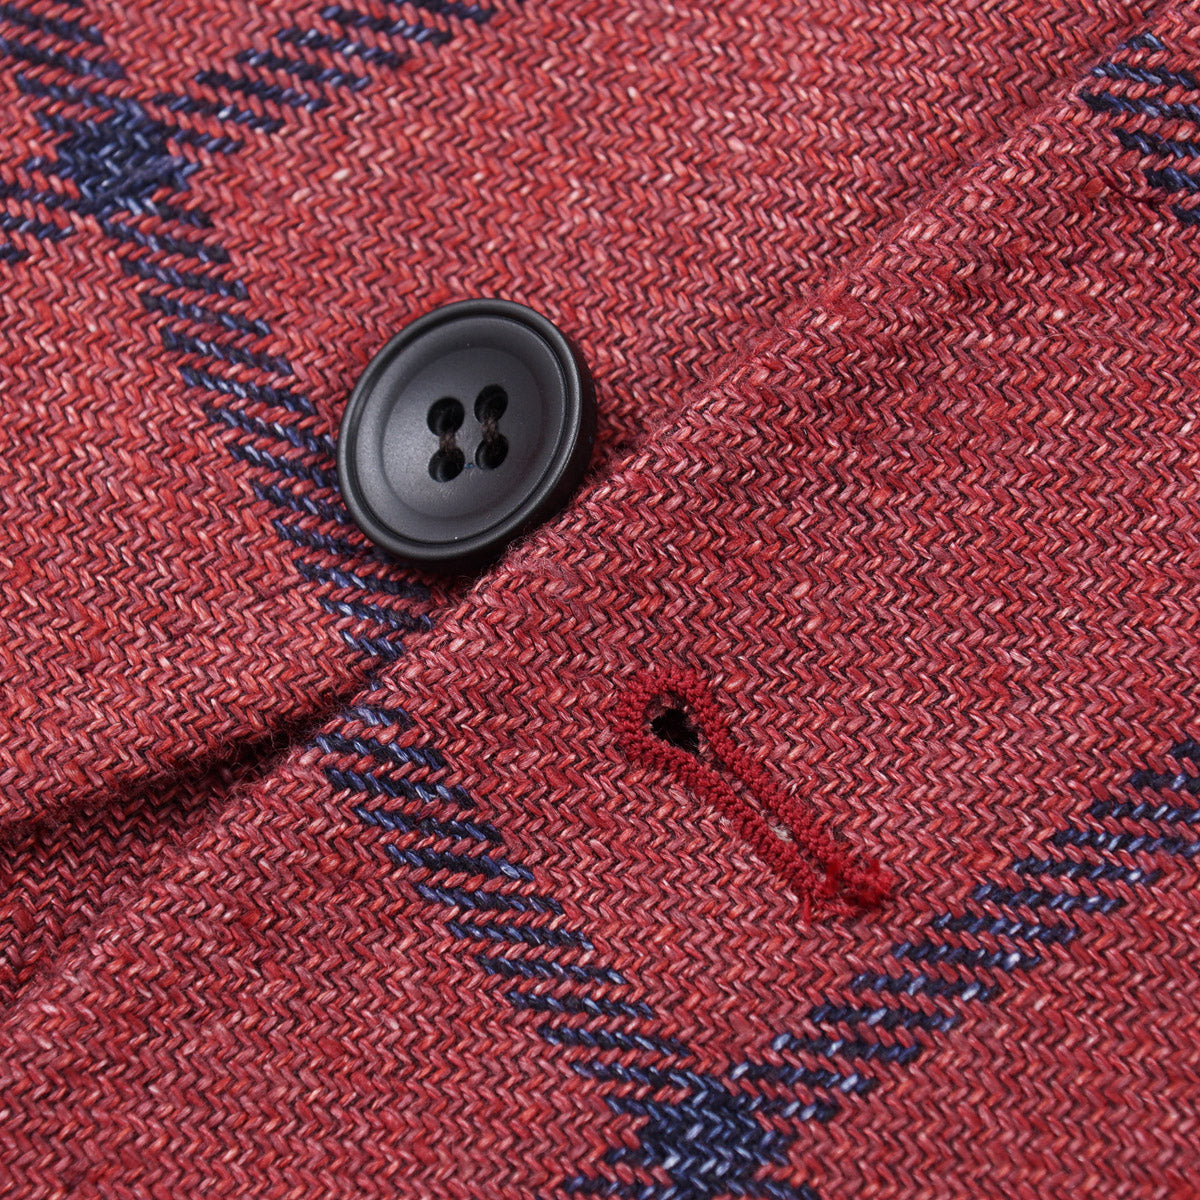 Sartorio Woven Wool and Hemp Sport Coat - Top Shelf Apparel